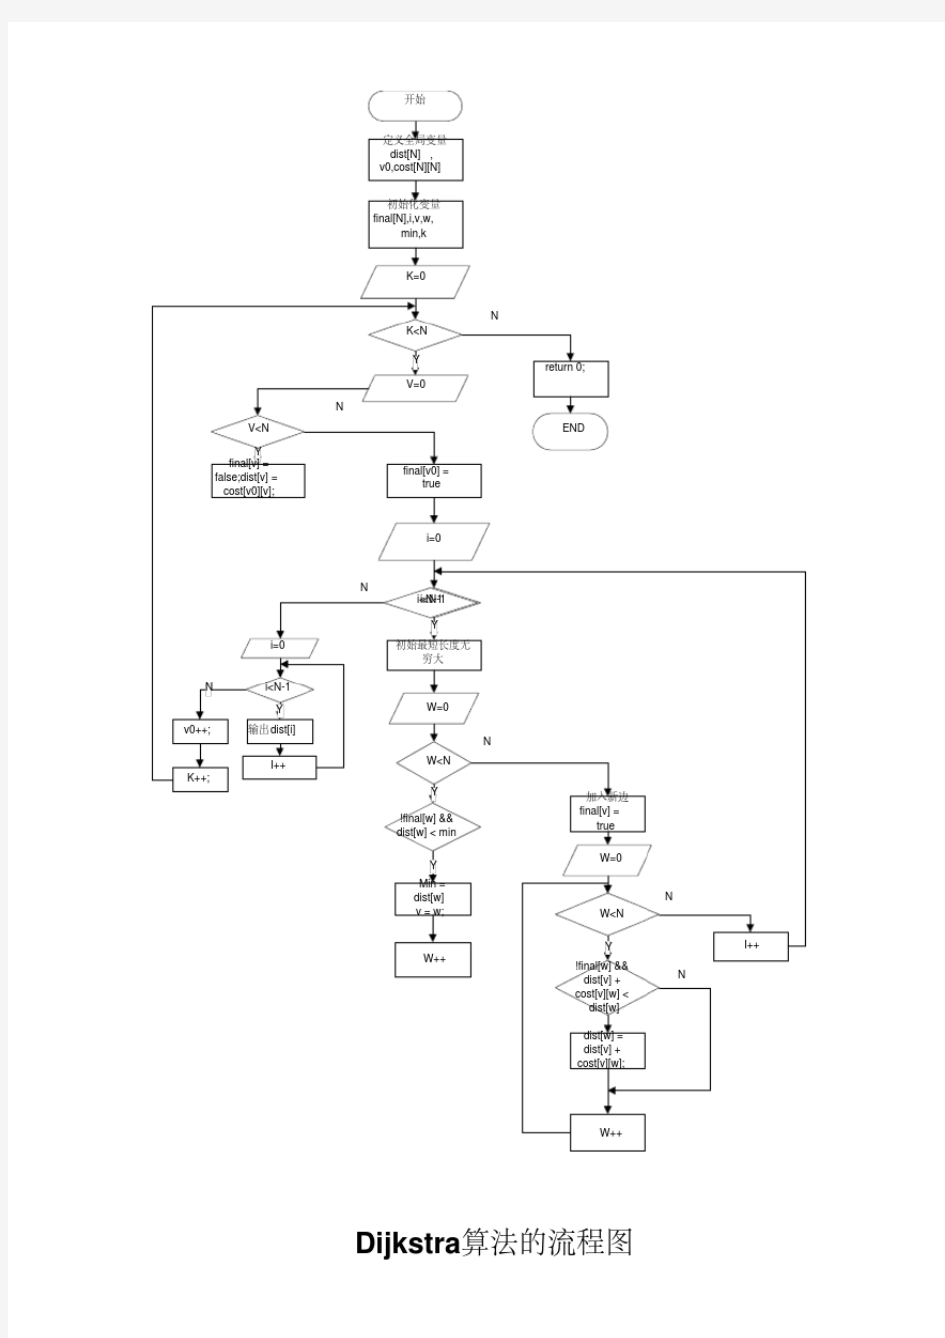 Dijkstra算法的流程图